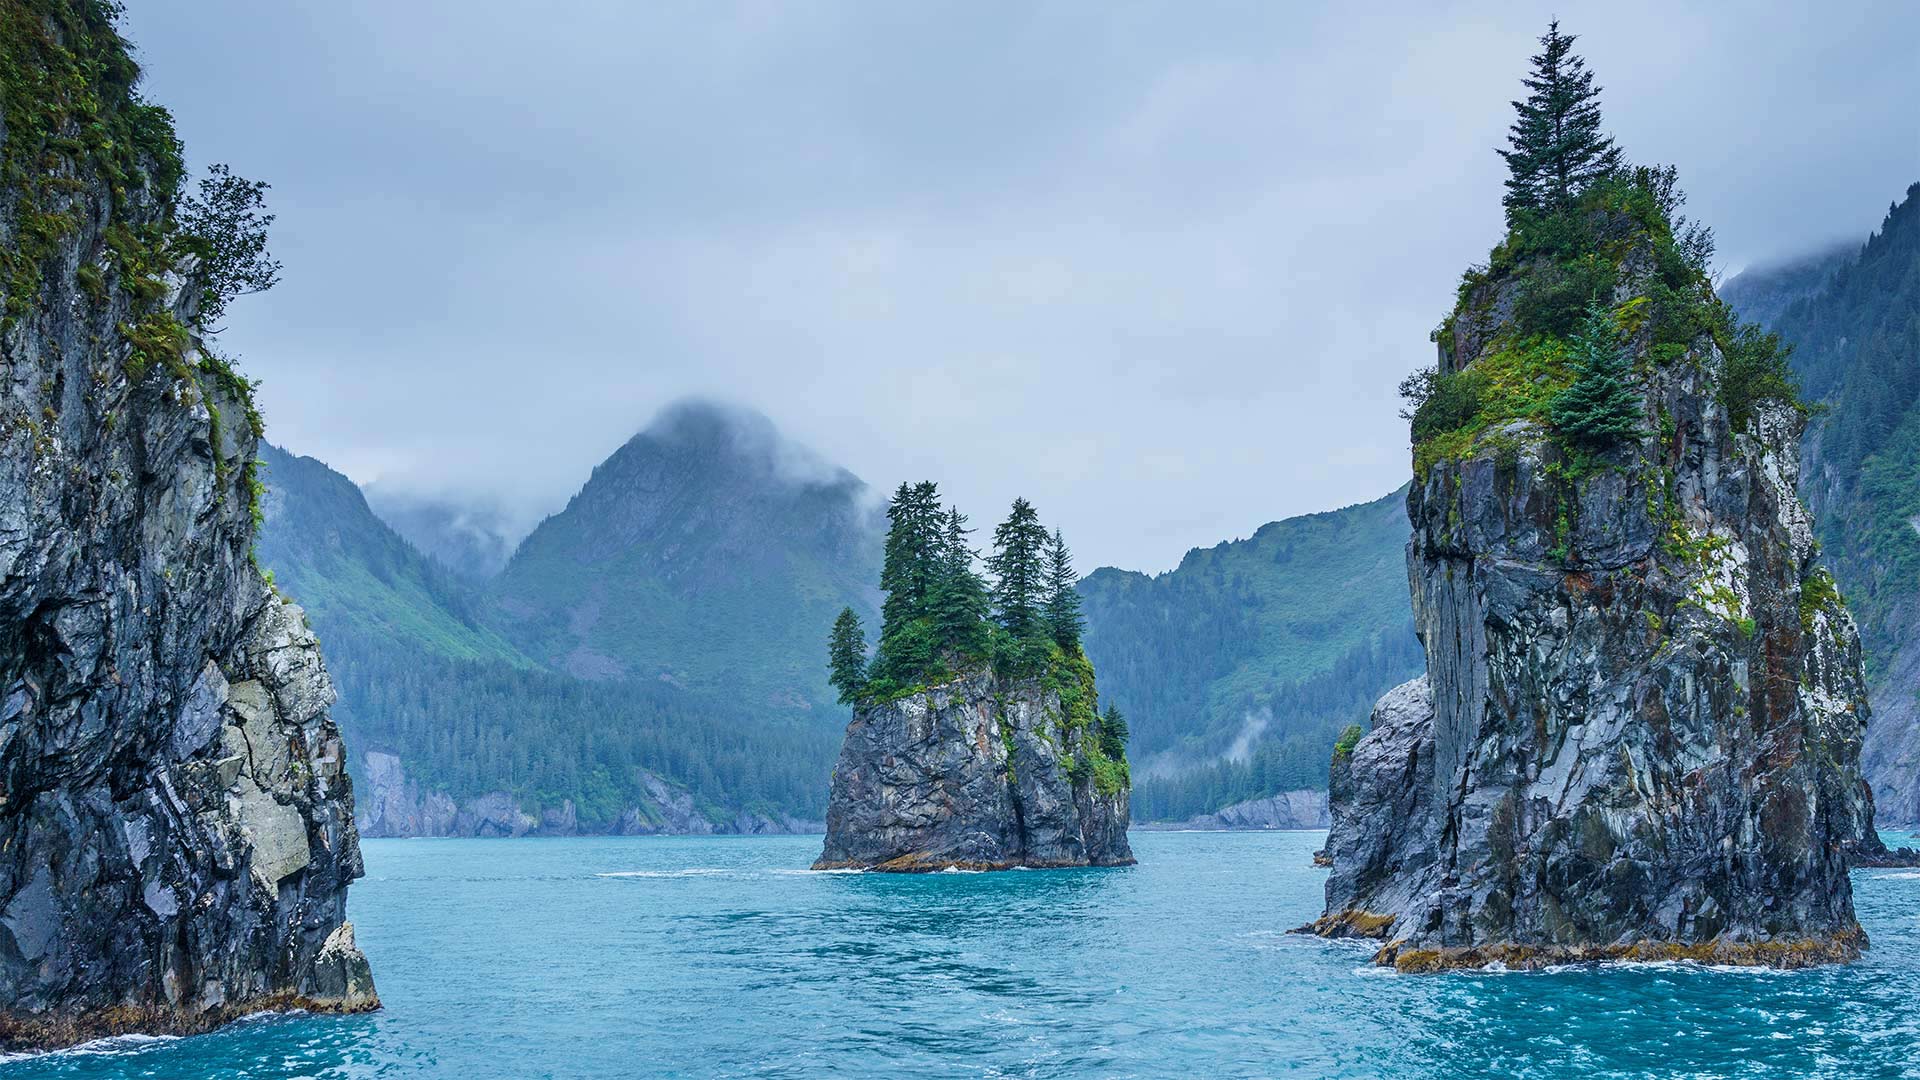 Cove of Spires in Kenai Fjords National Park, Alaska - Sekar B/Shutterstock)